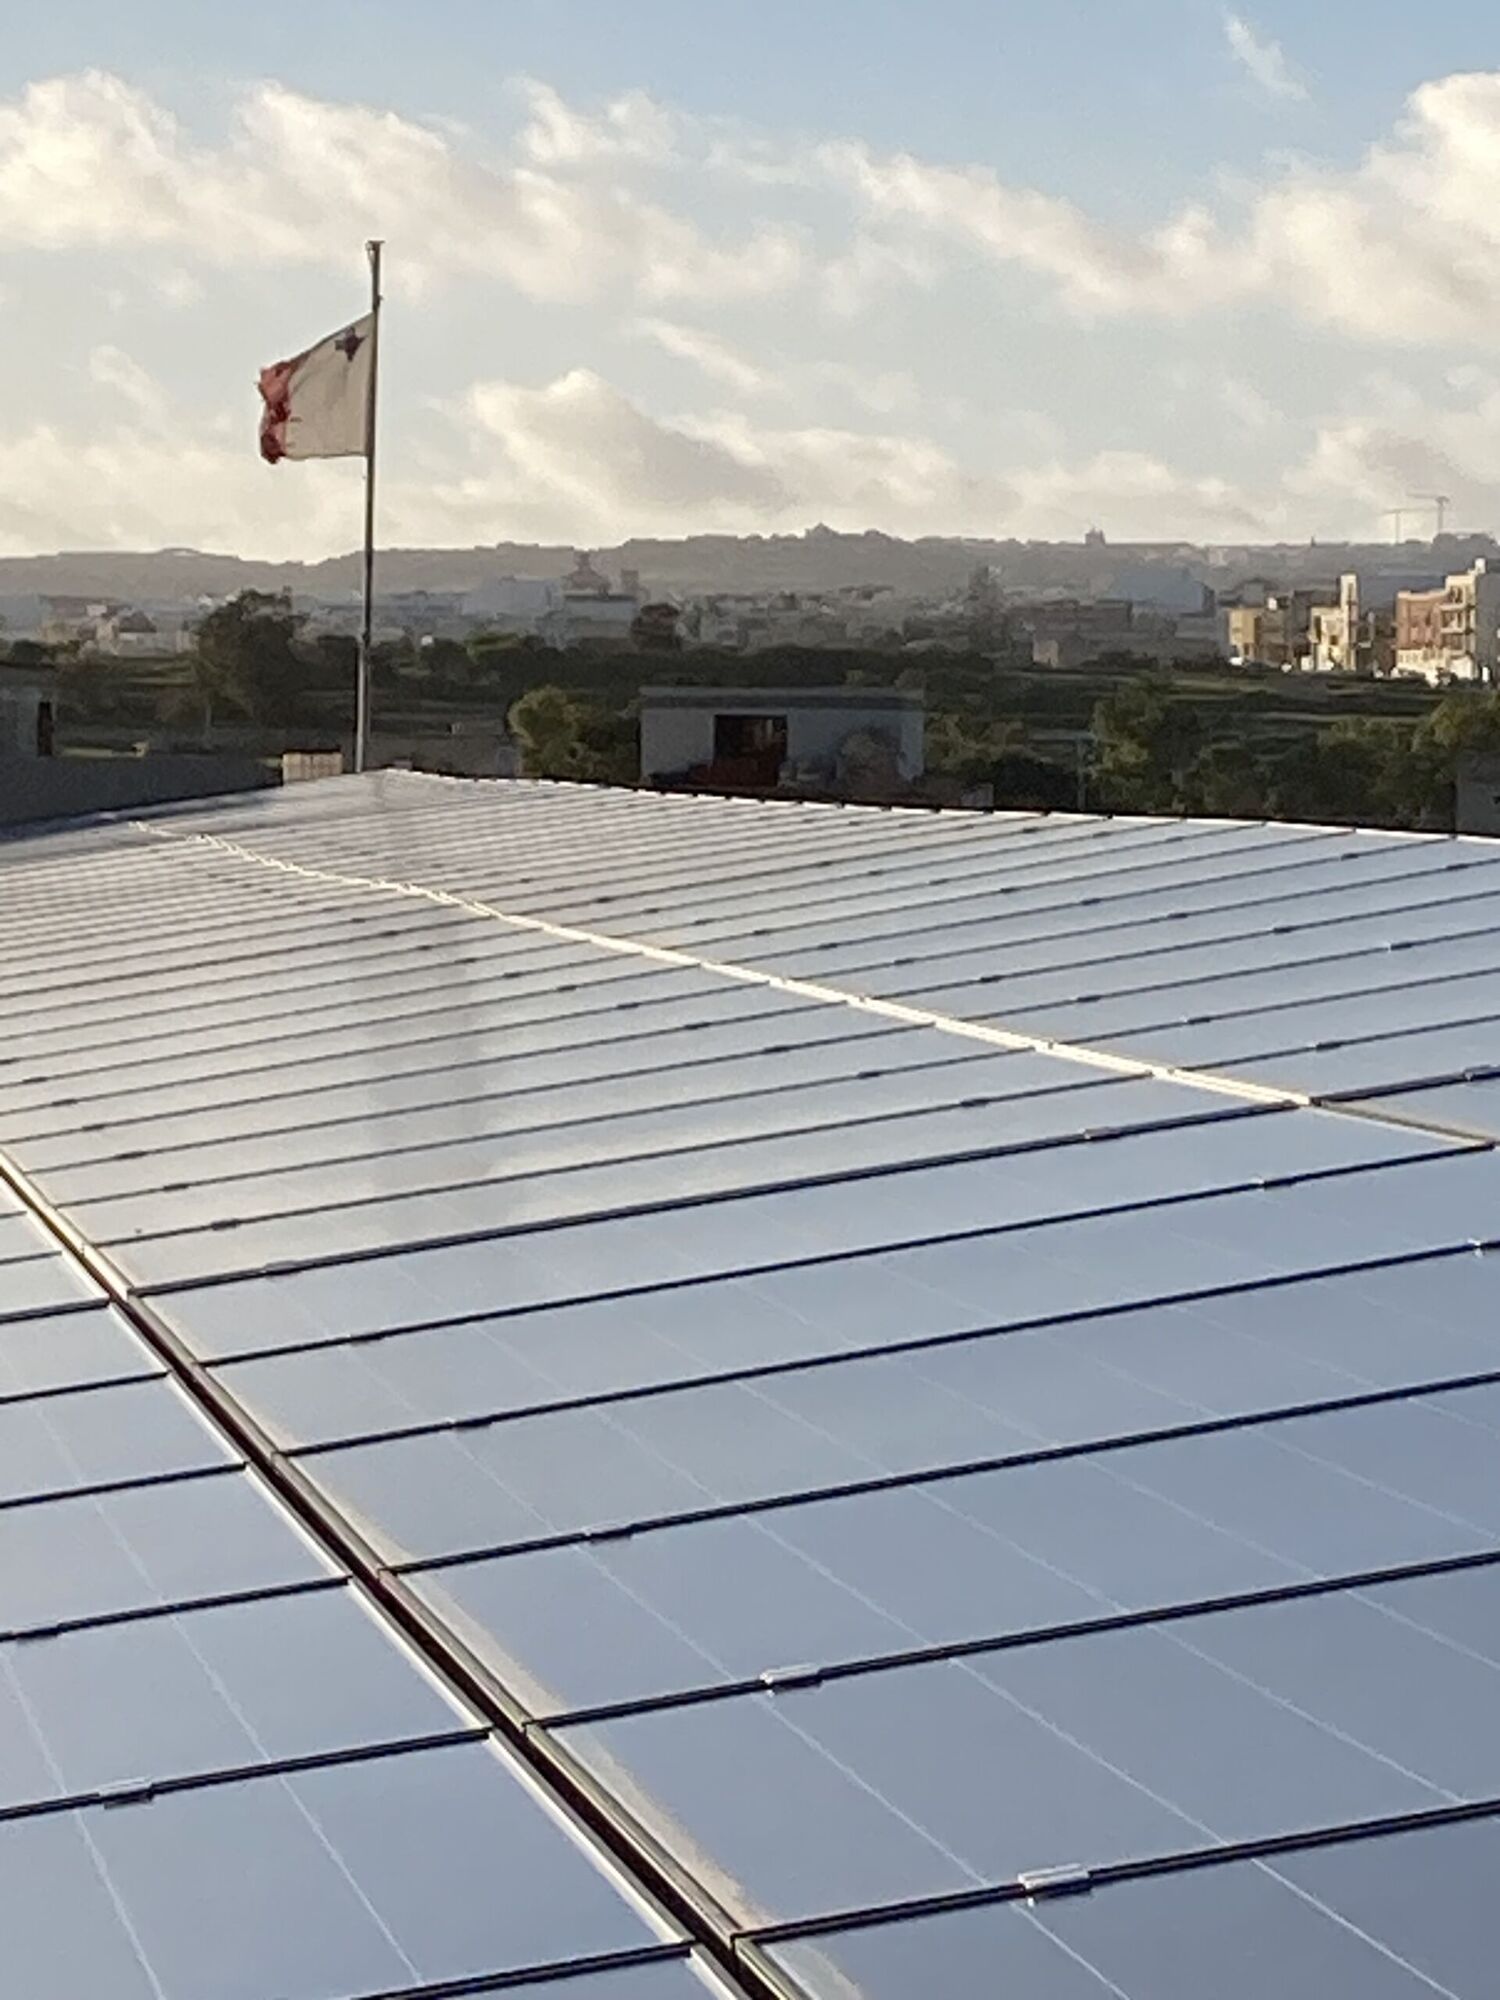 Maltese flag and solar panels